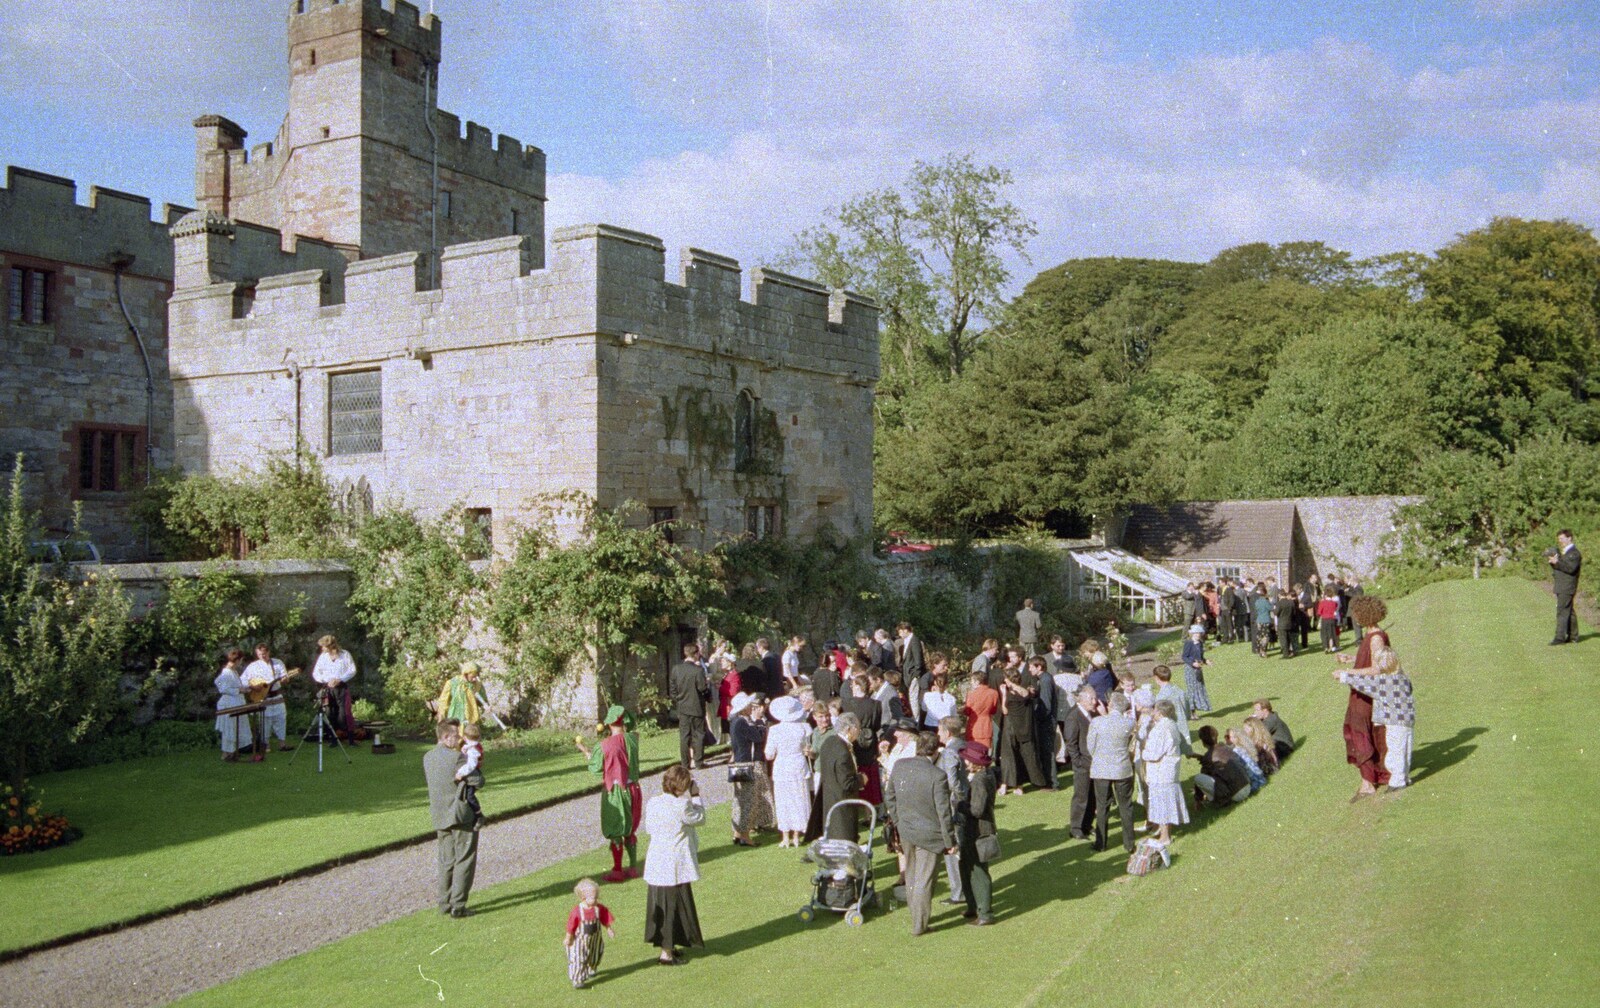 Stuart and Sarah's CISU Wedding, Naworth Castle, Brampton, Cumbria - 21st September 1996: Out in the castle grounds